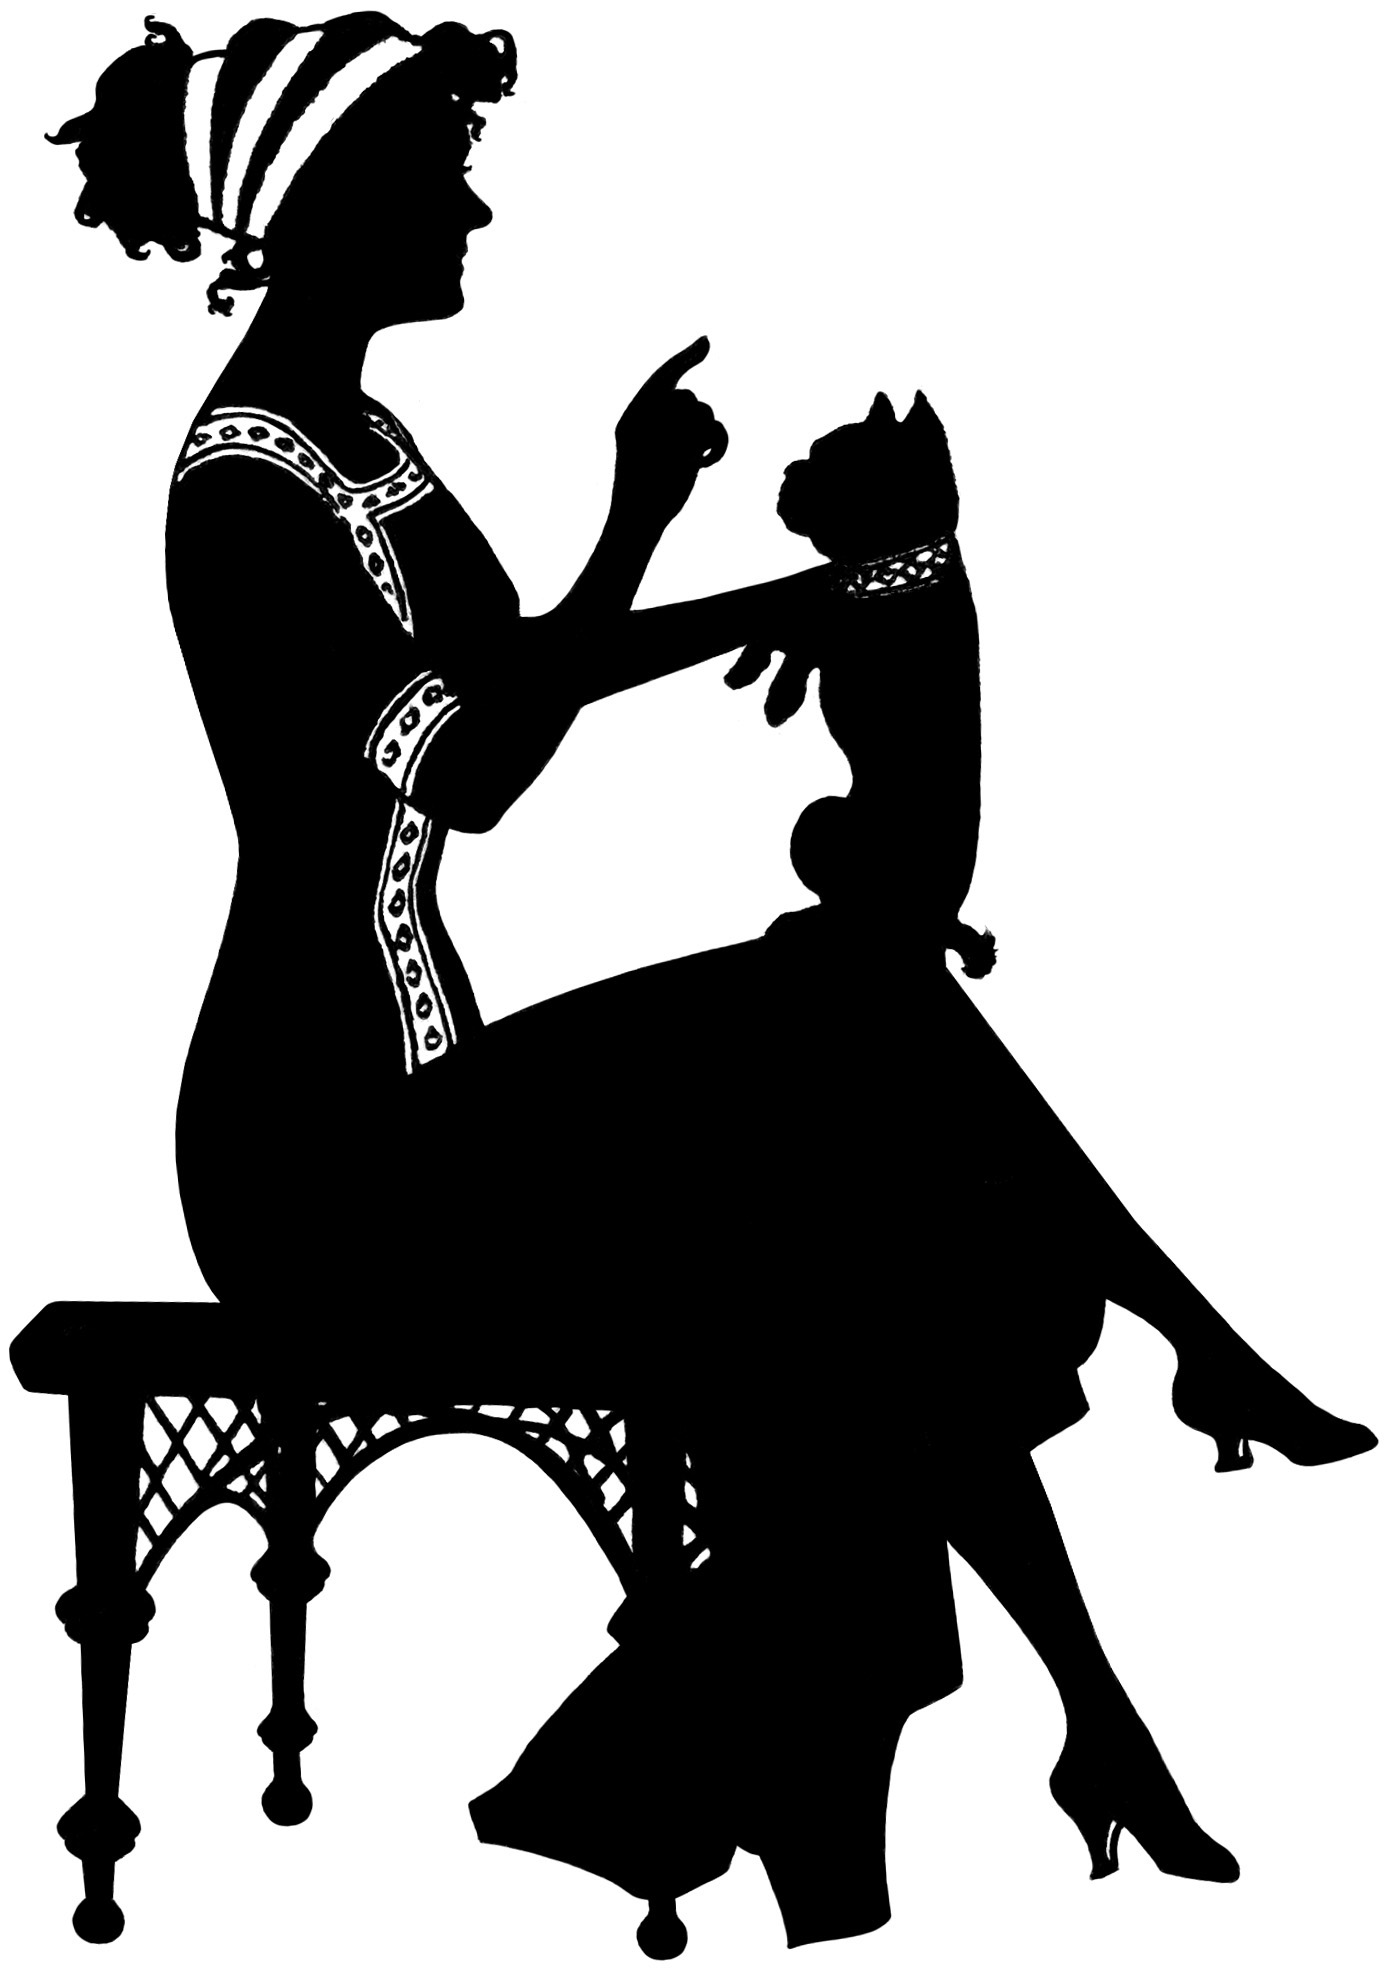 victorian woman silhouette clip art